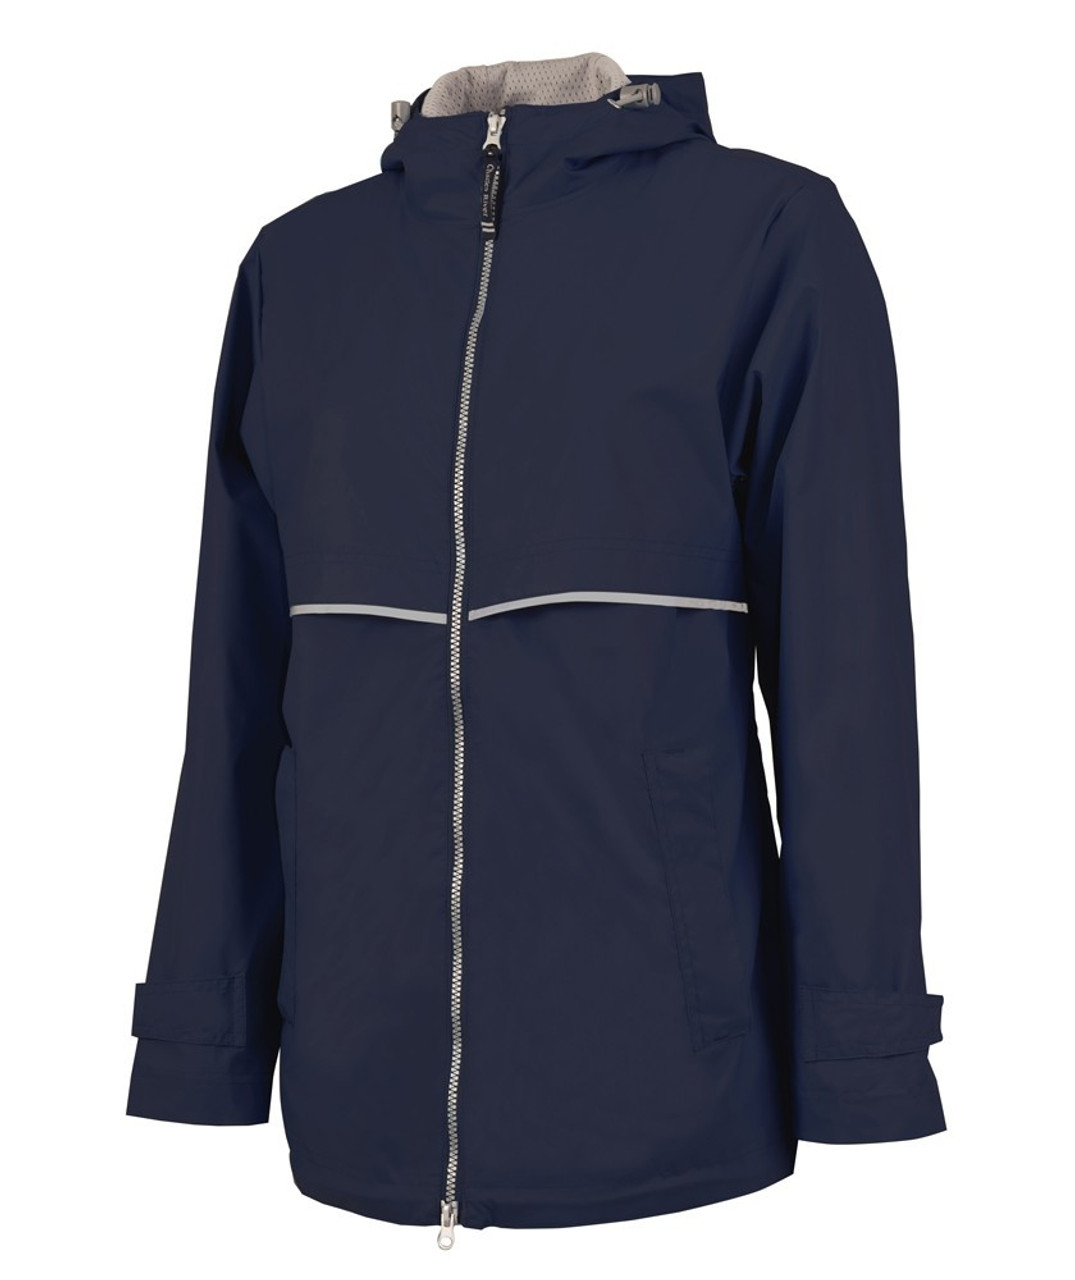 Monogrammed New Englander Rain Jacket - Charles River - Monogrammed Gifts -  Waterproof Rain Jacket - Hooded Rain Jacket - Monogram Outerwear